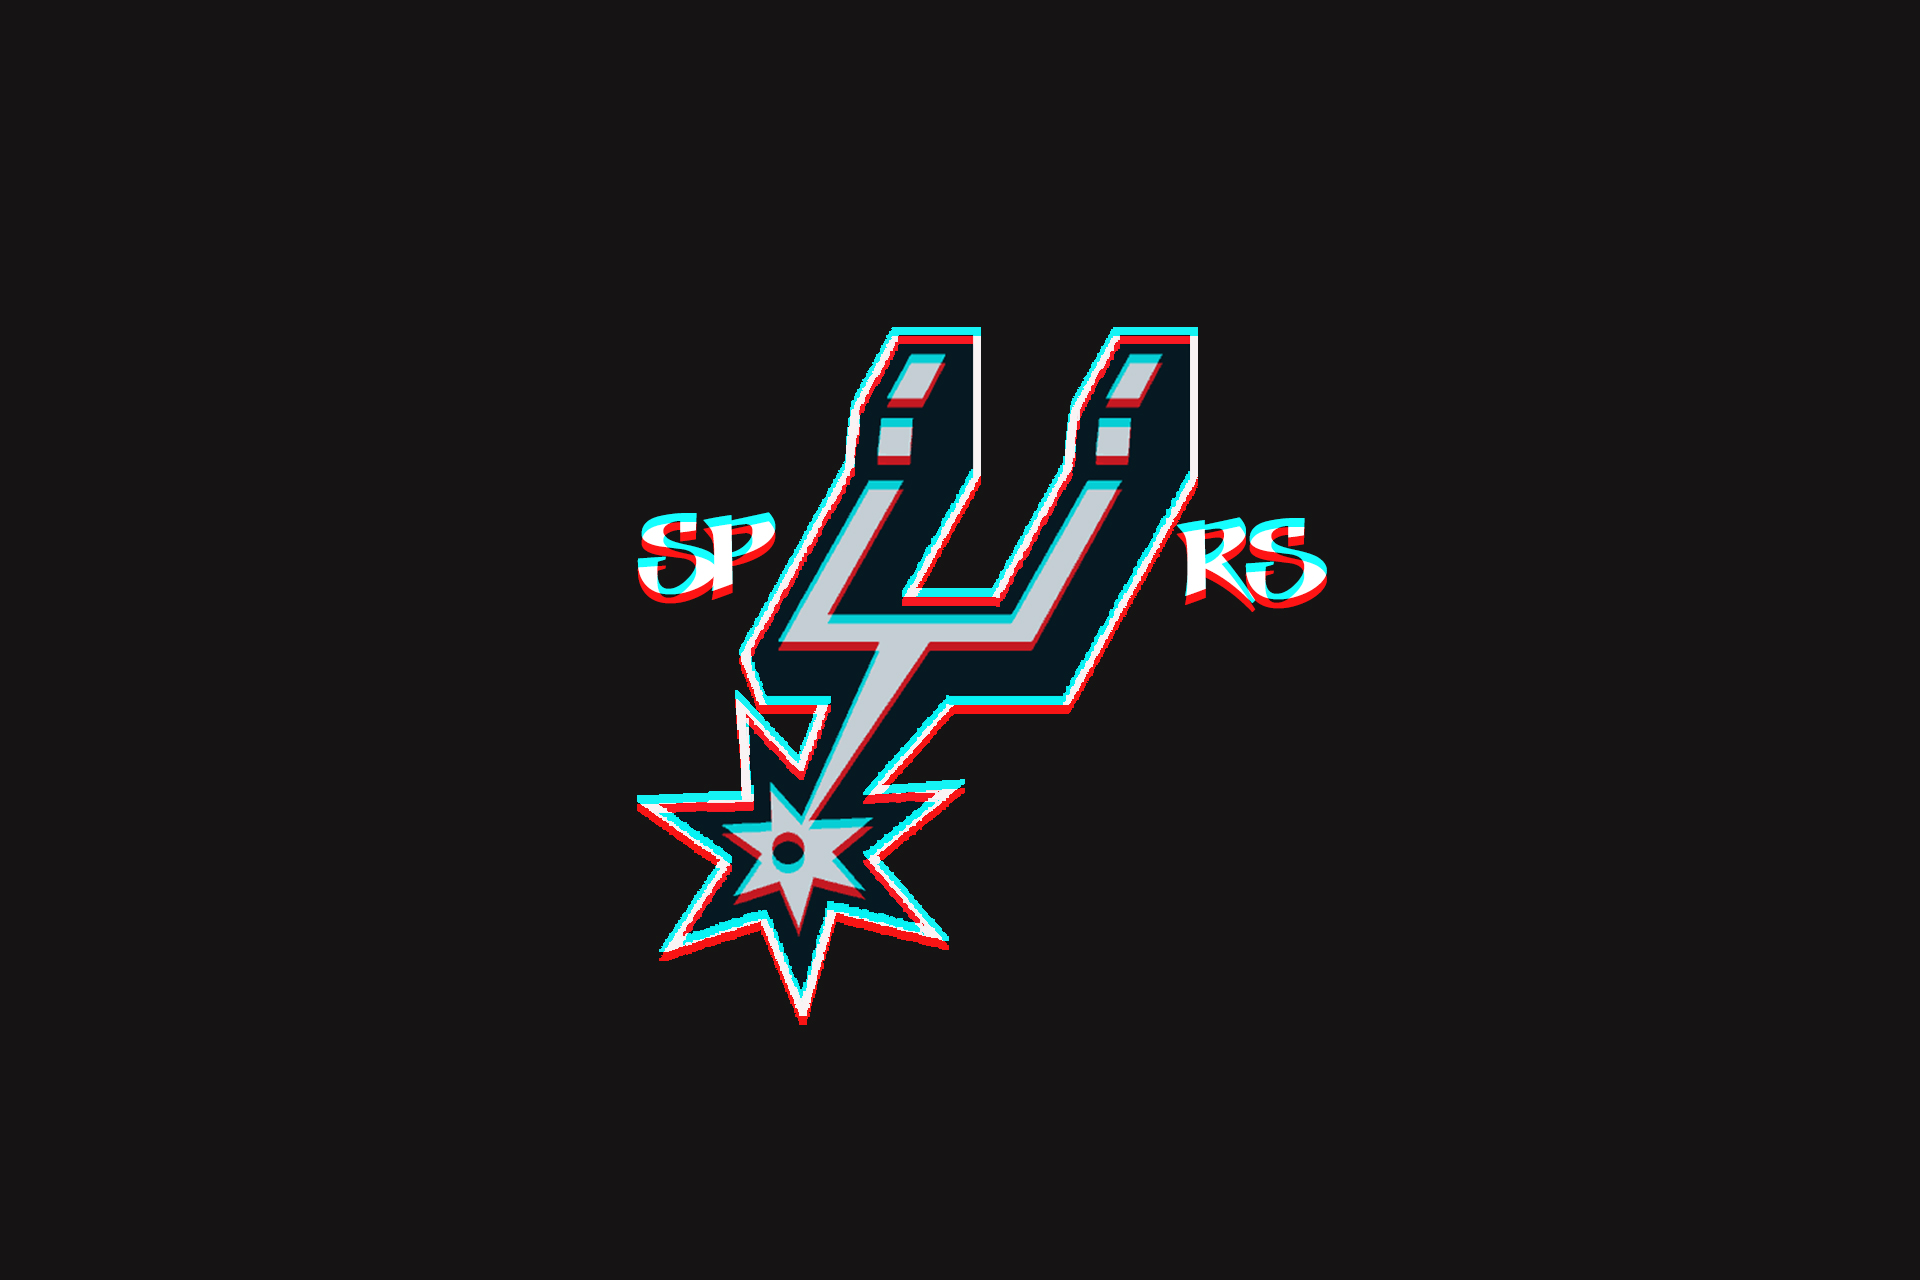 Spurs Logo Wallpaper